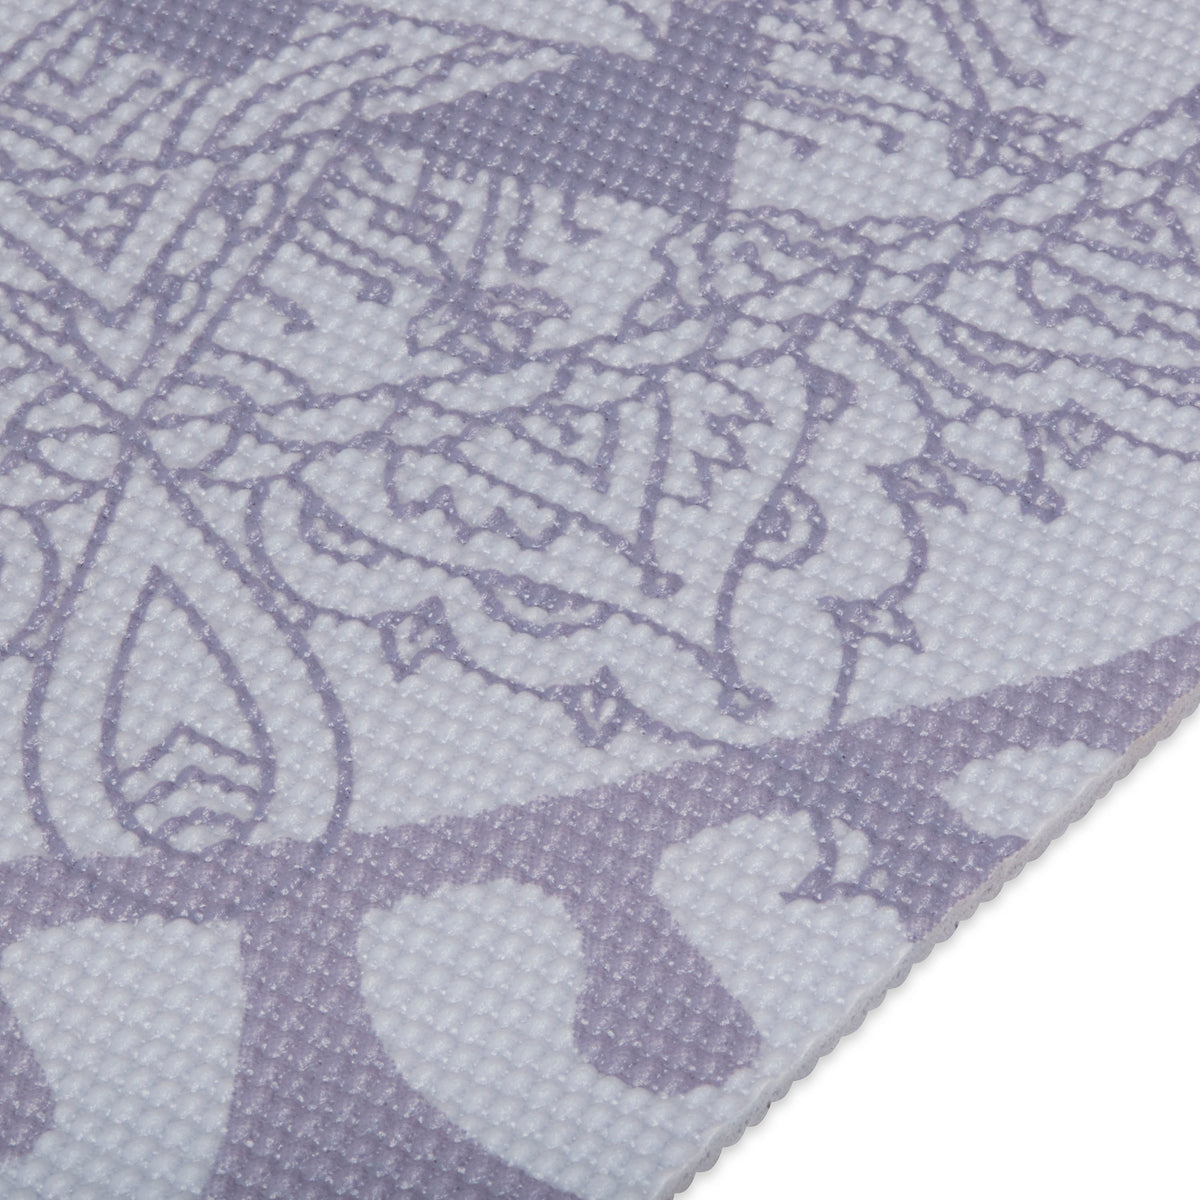 Gaiam Sundial Yoga Mat (5mm) Wild Lilac closeup